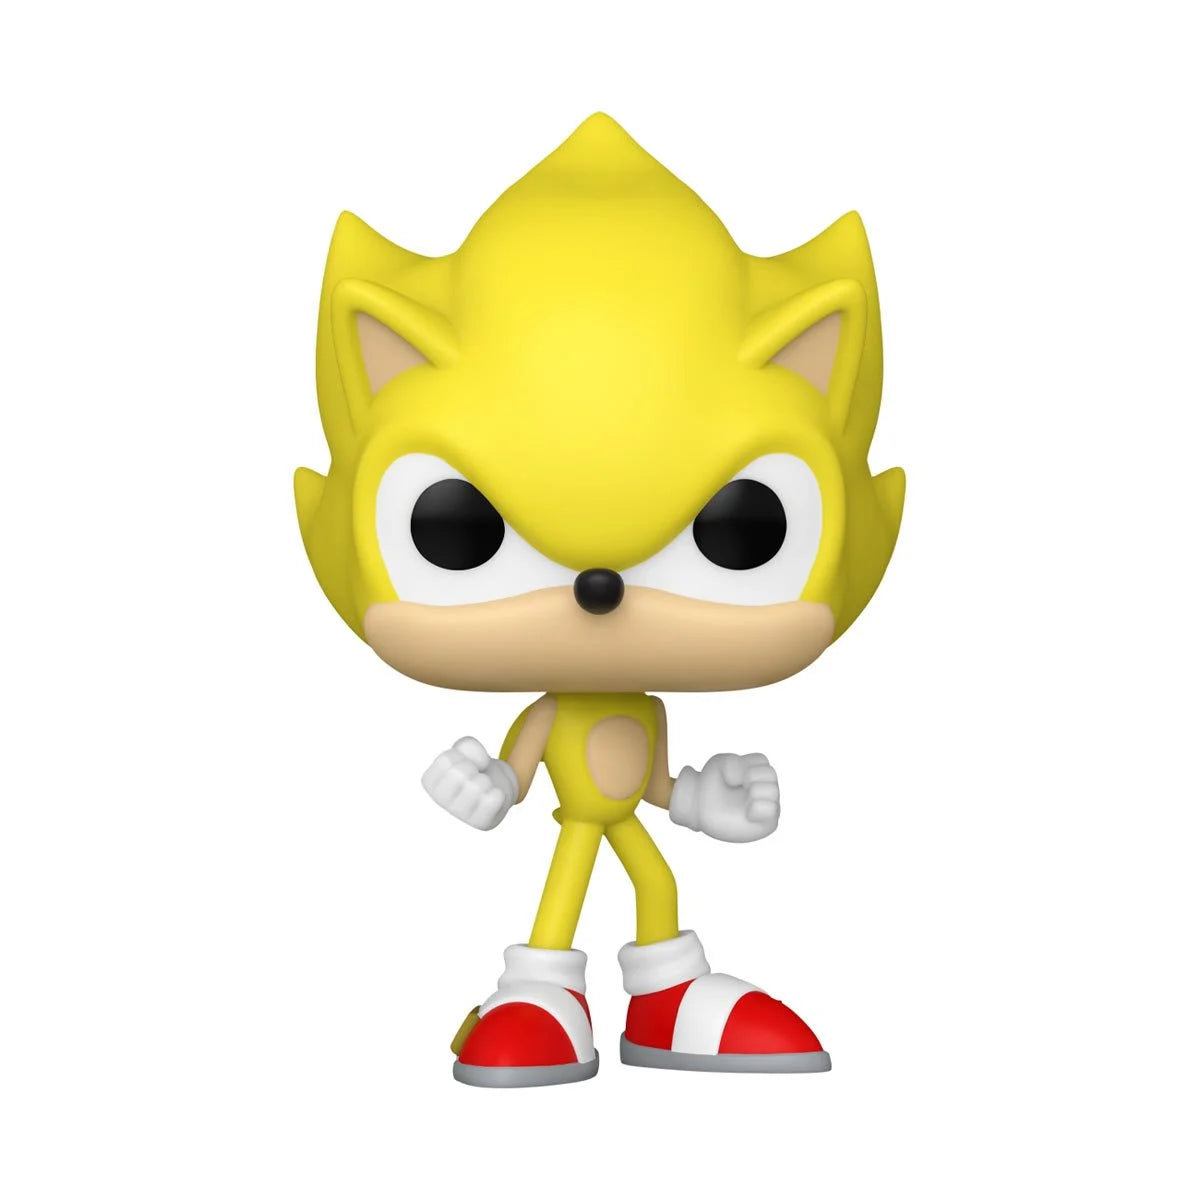 Sonic the Hedgehog - Super Sonic Funko Pop!